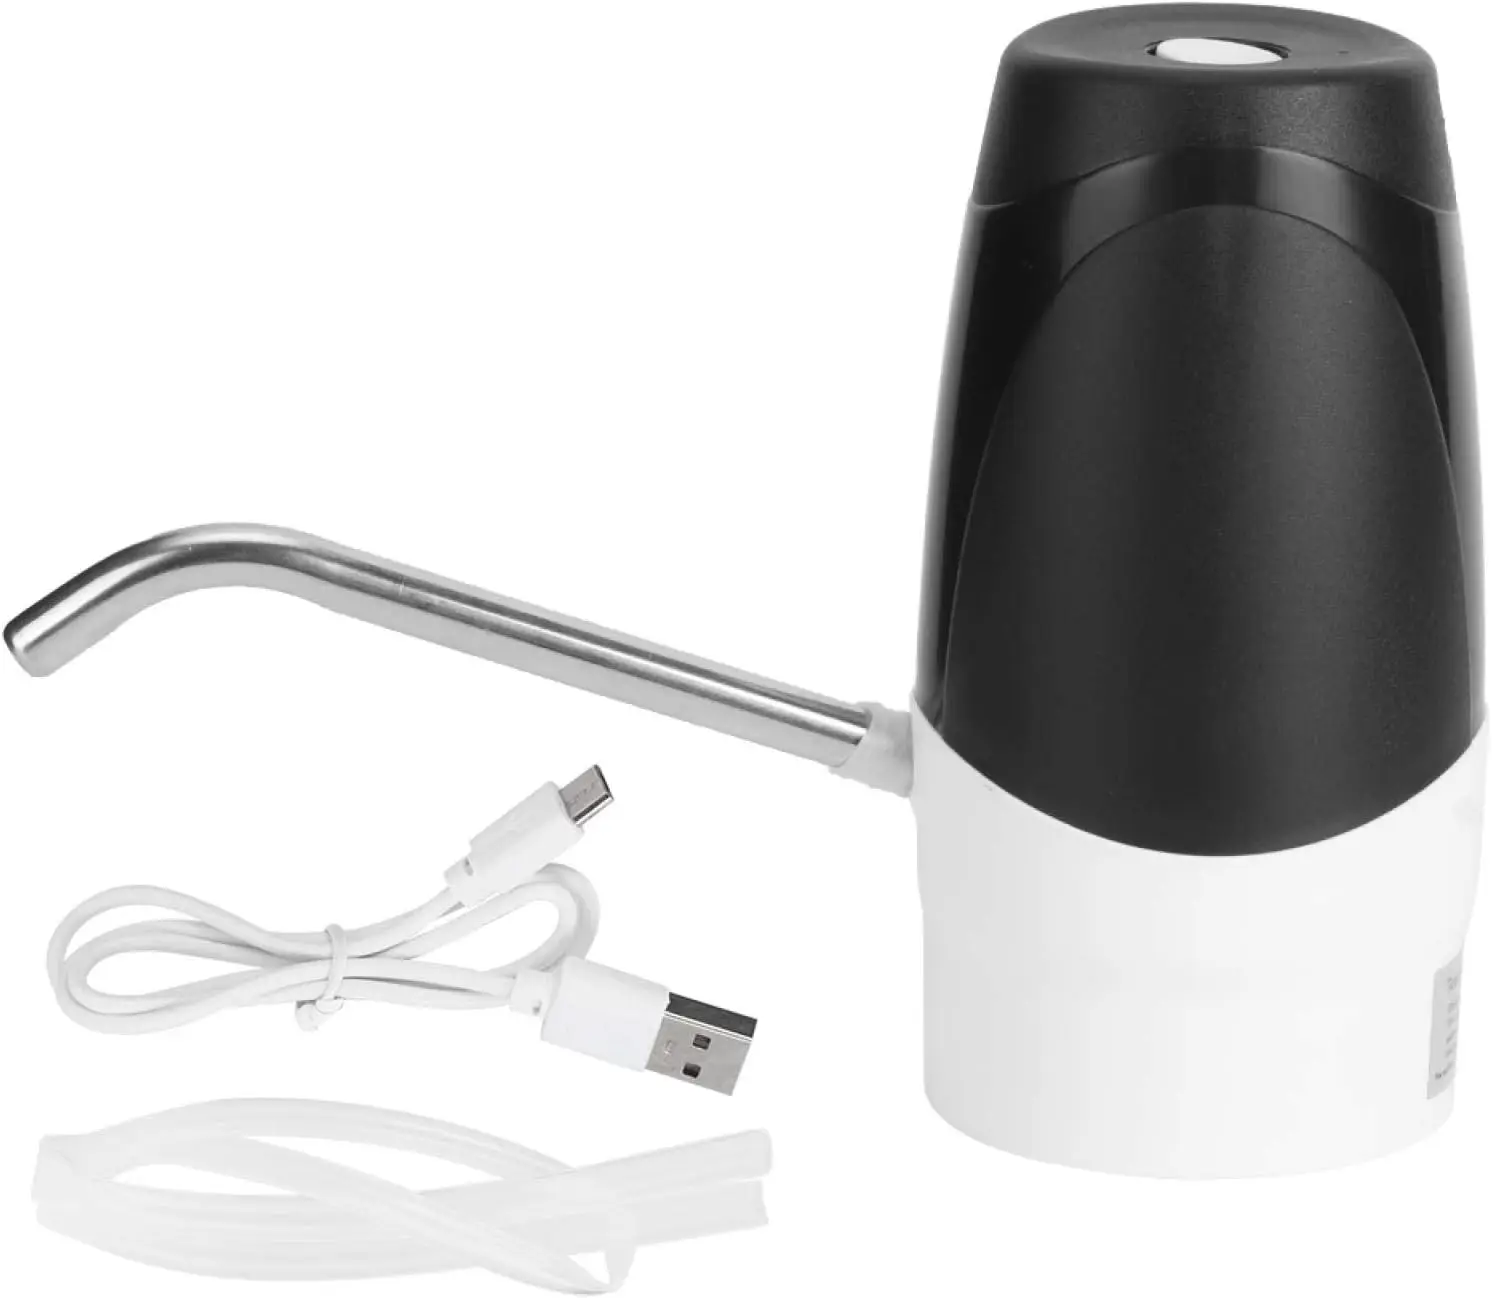 

Bomba de botella de agua - Bomba automática de botella de agua potable Dispensador de carga USB para uso de la oficina el hog